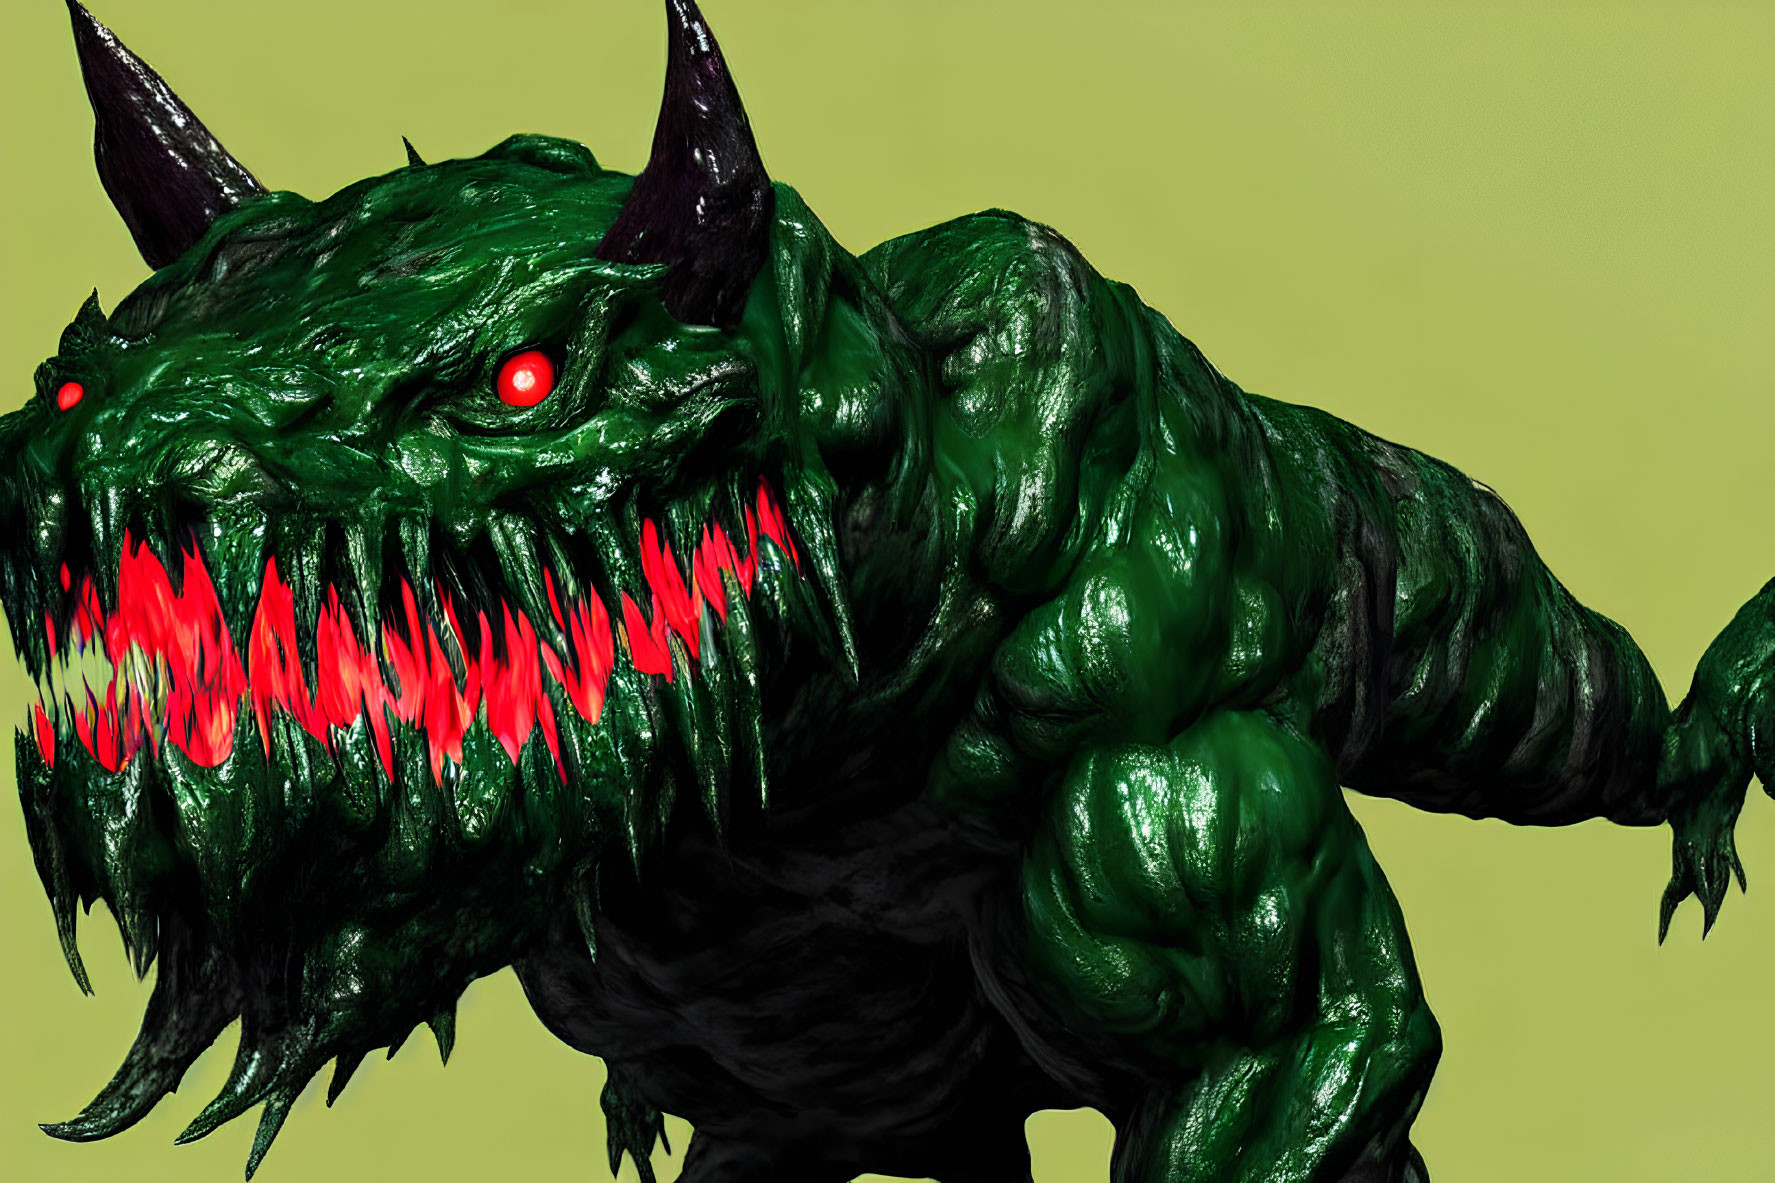 Menacing green monster with red teeth, glowing eyes, and black horns